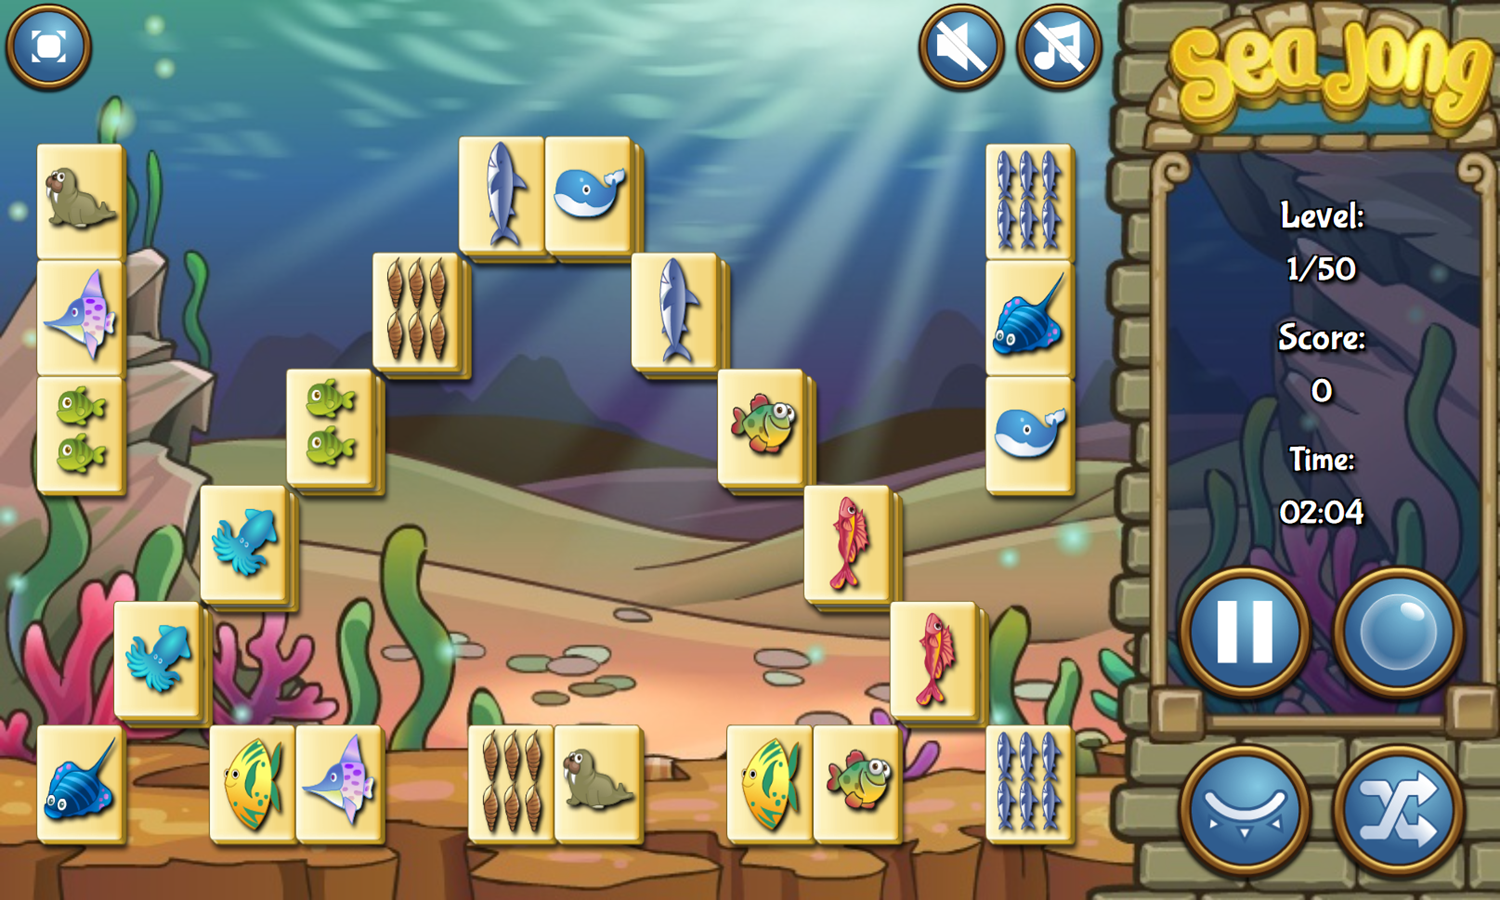 Seajong Game Level Start Screenshot.